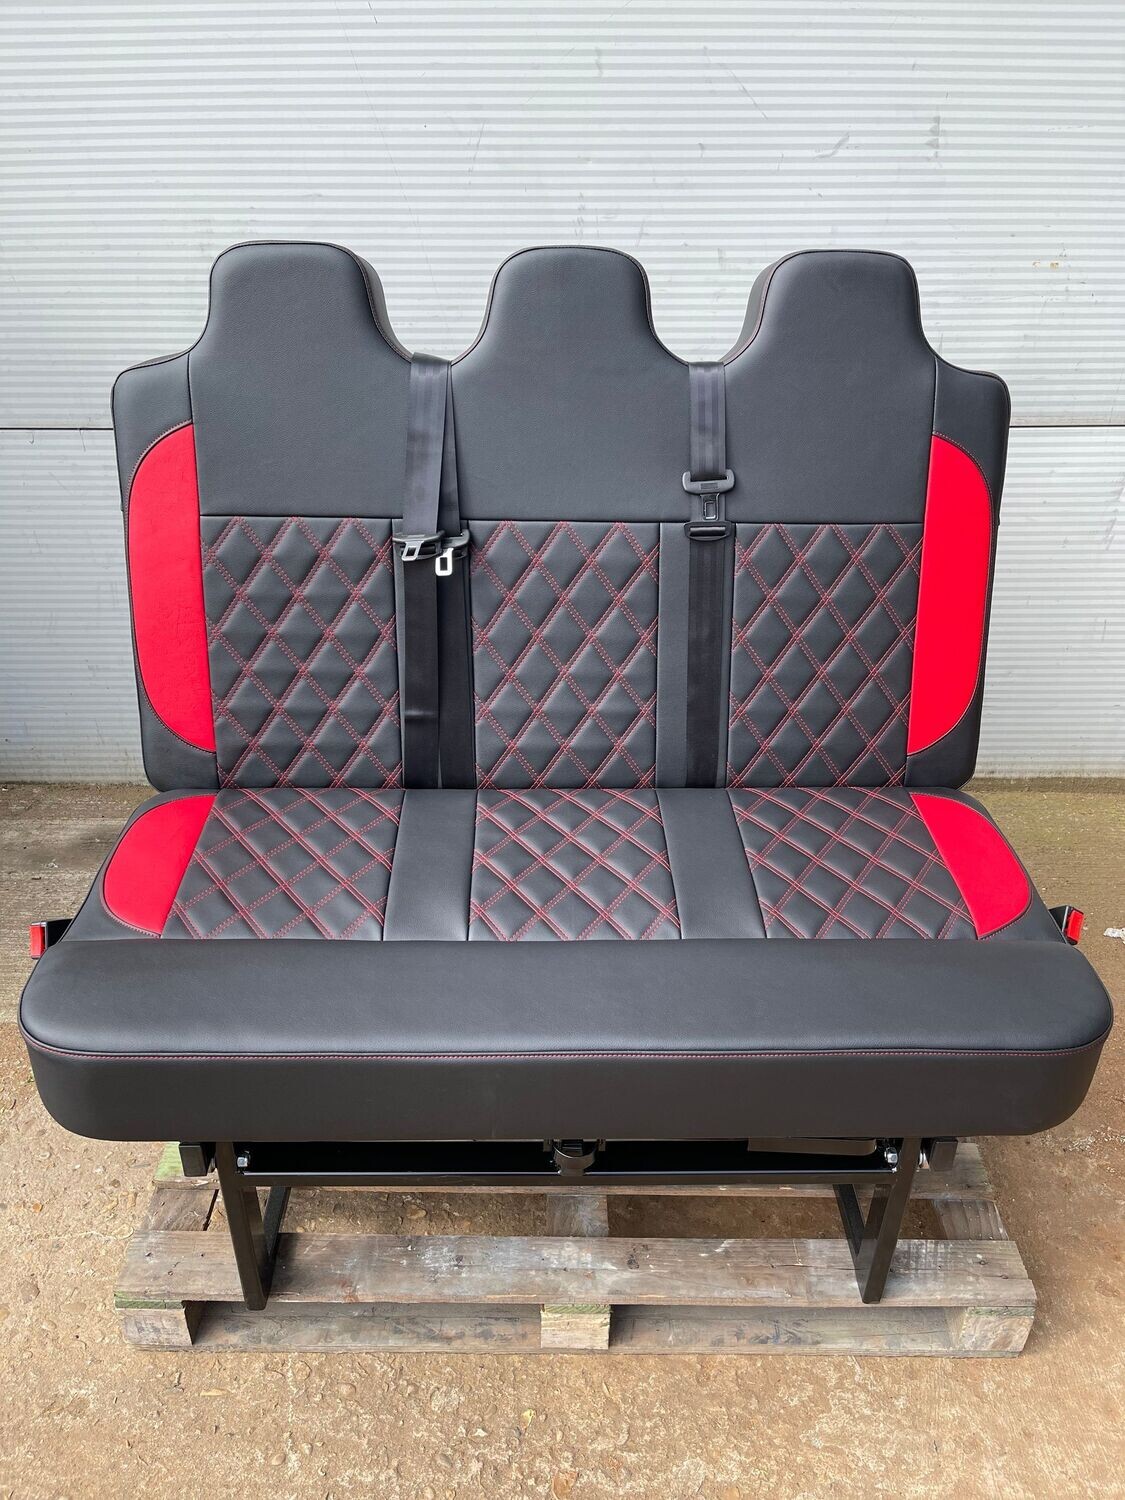 Rock & Roll Bett 3 Punkt Inertia Sitzgurt Set Black für VW Transporter  Approved